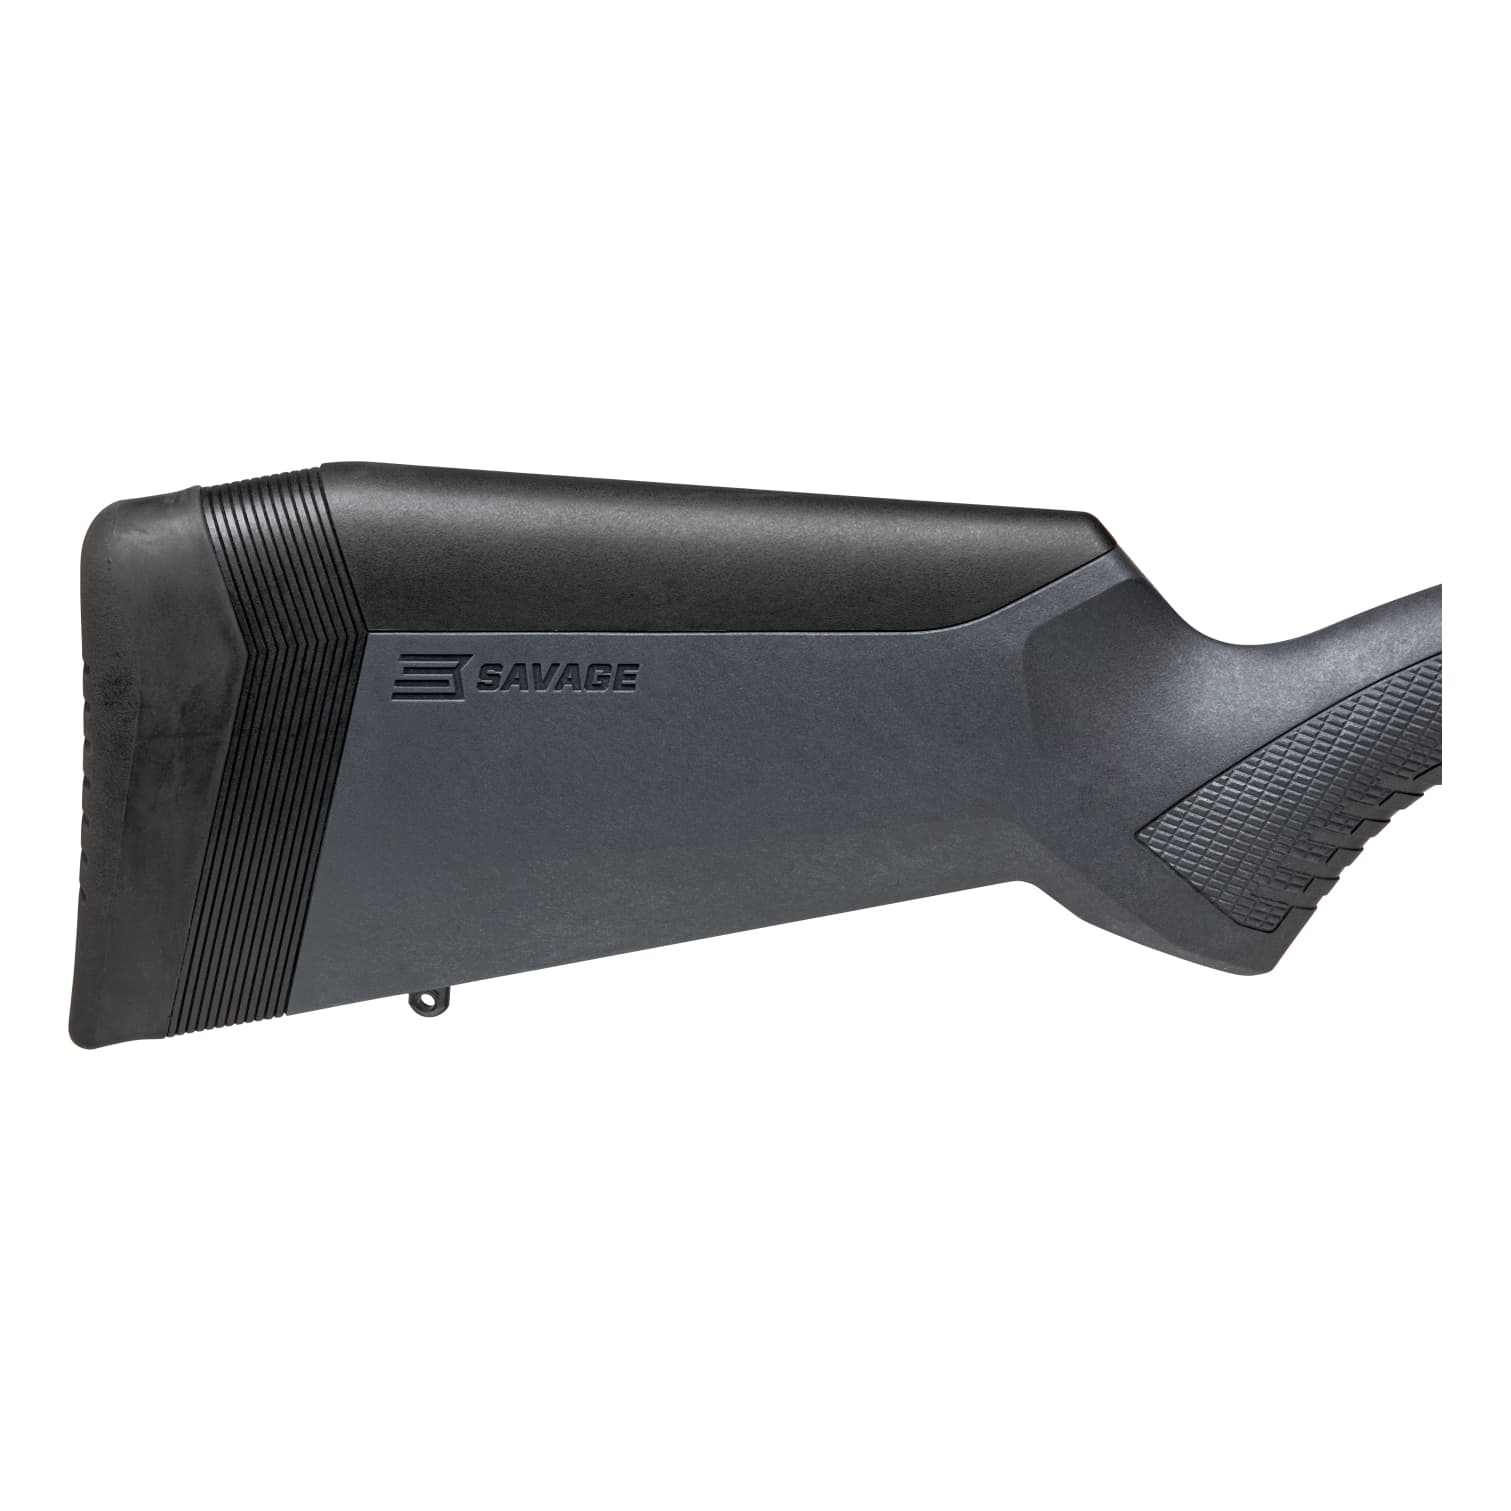 Savage® 110 Carbon Tactical Bolt-Action Rifle